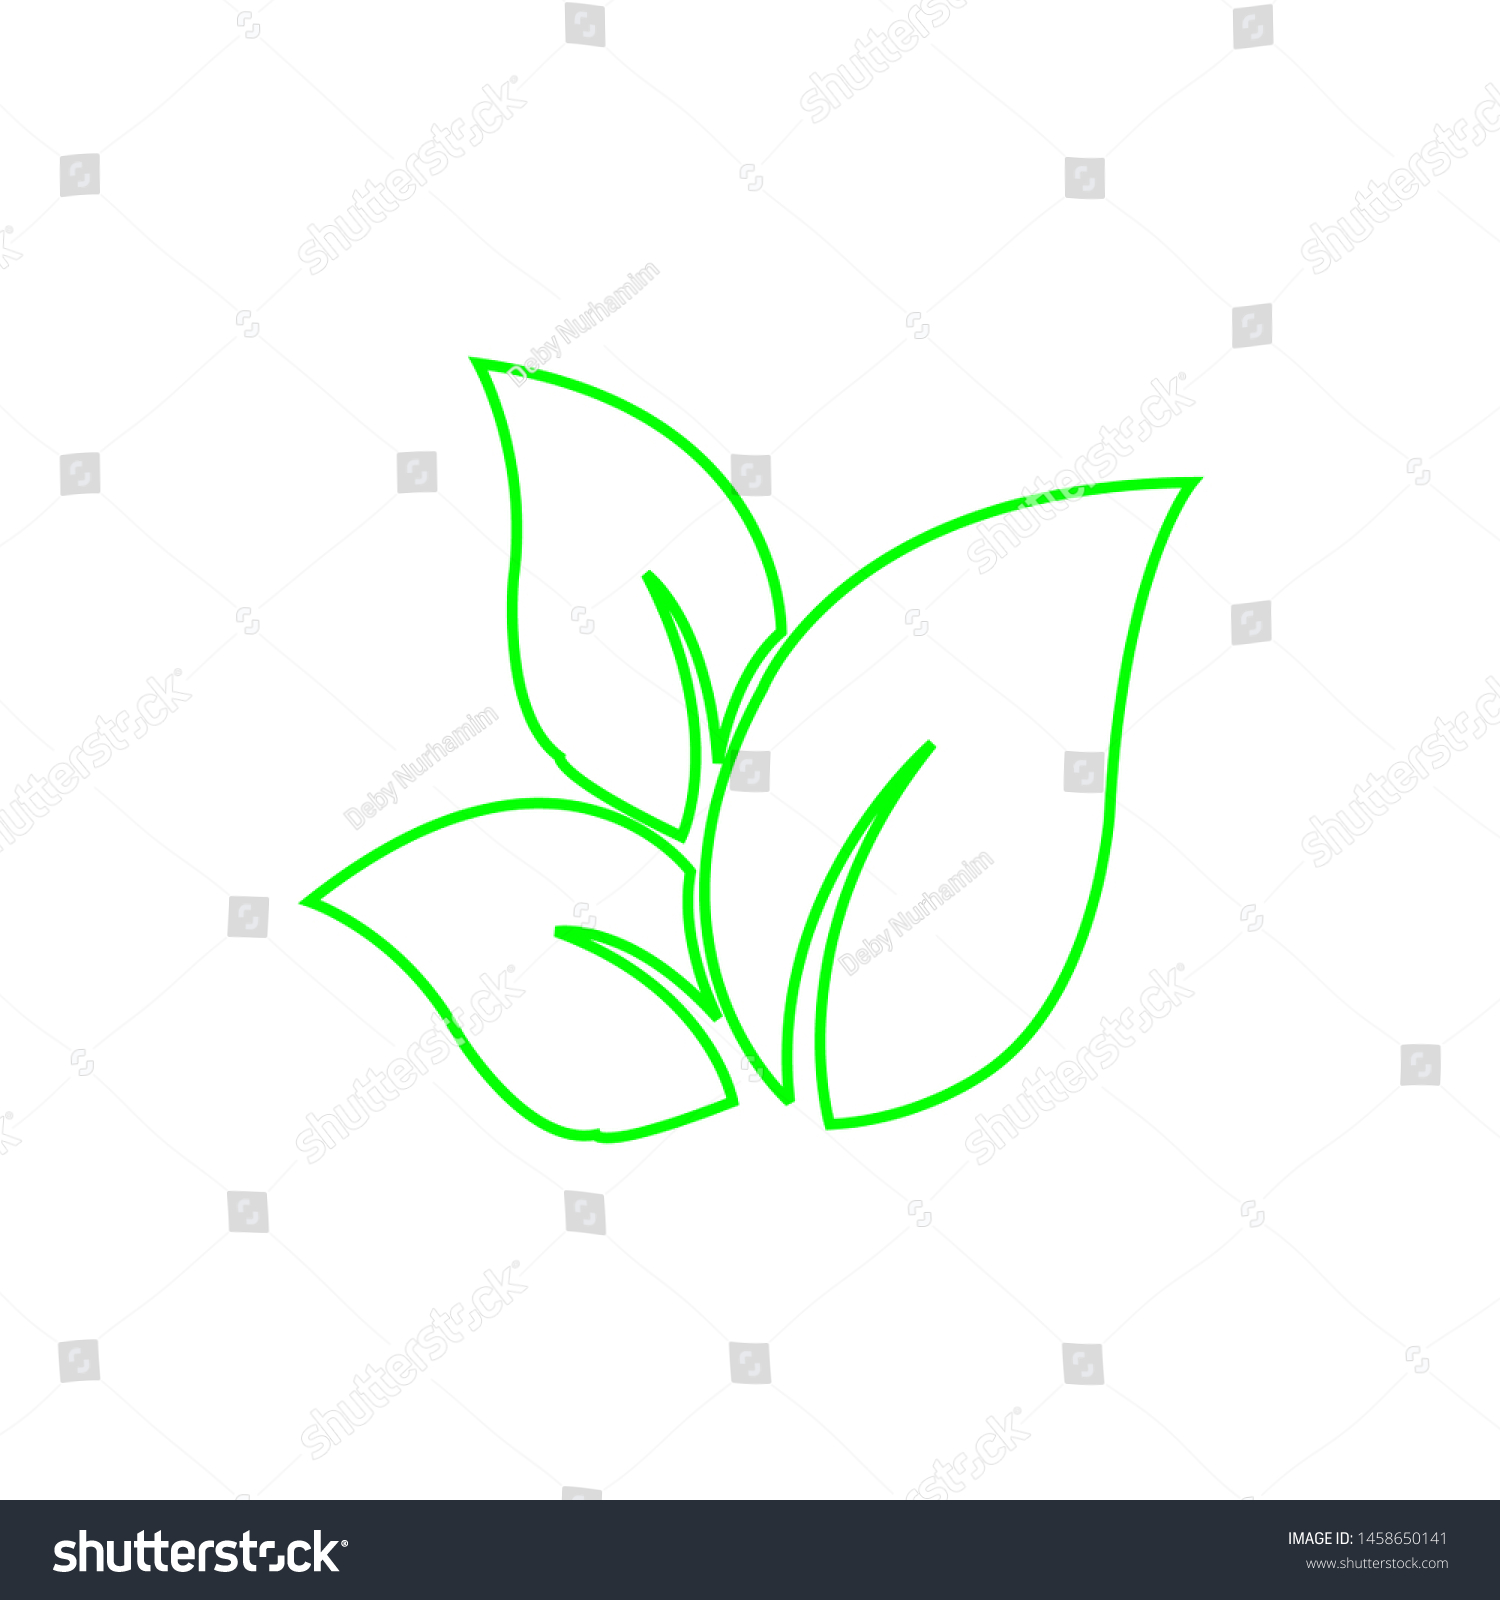 Tea leaf vector symbol. Leaf symbol symbol icon #1458650141